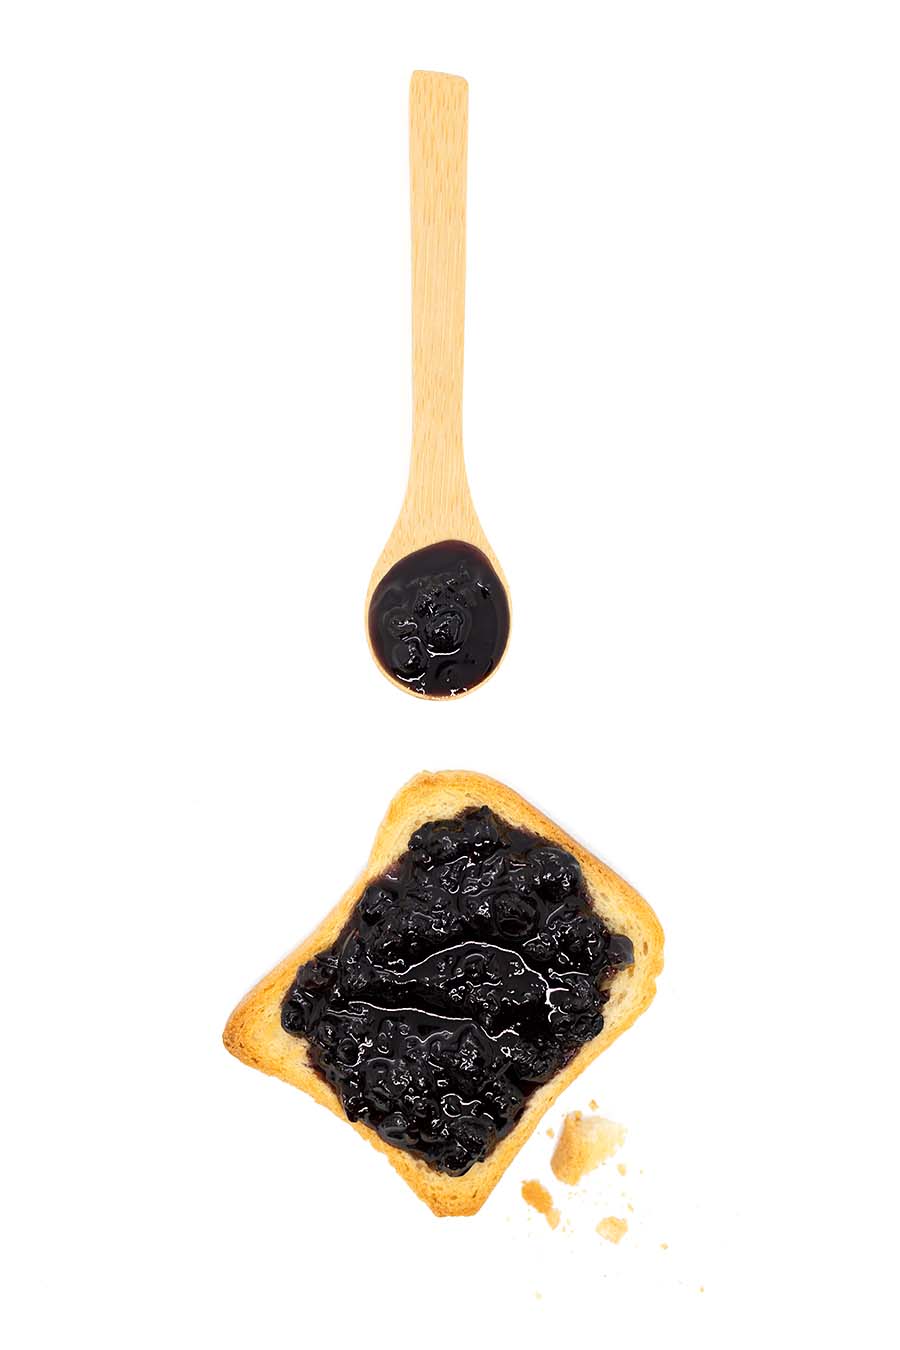 Artisanal Forest Wild Fruit Jam spoon toast Health from Europe